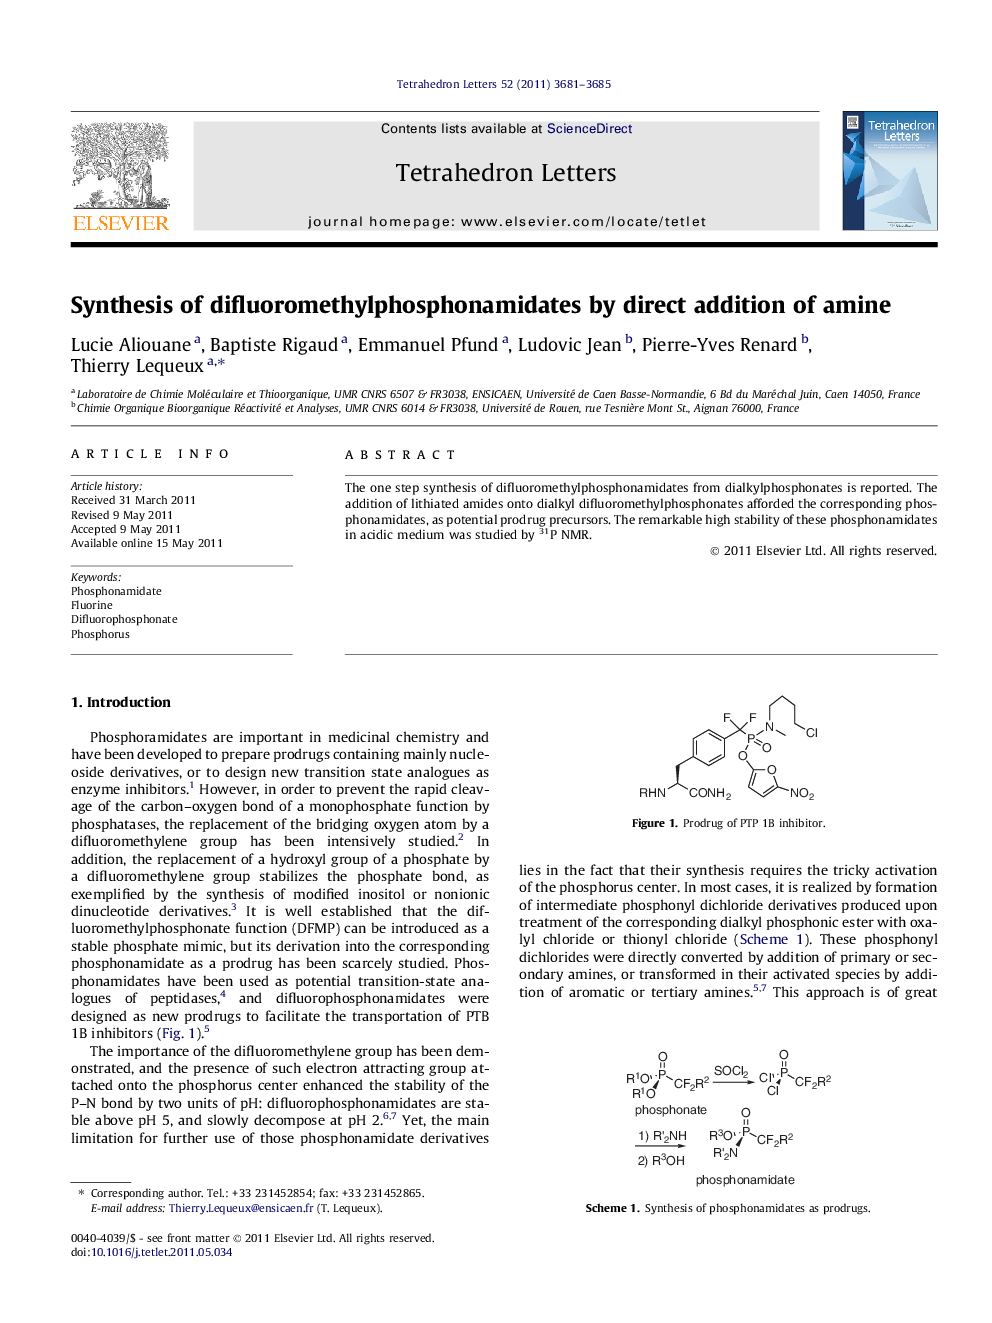 Synthesis of difluoromethylphosphonamidates by direct addition of amine